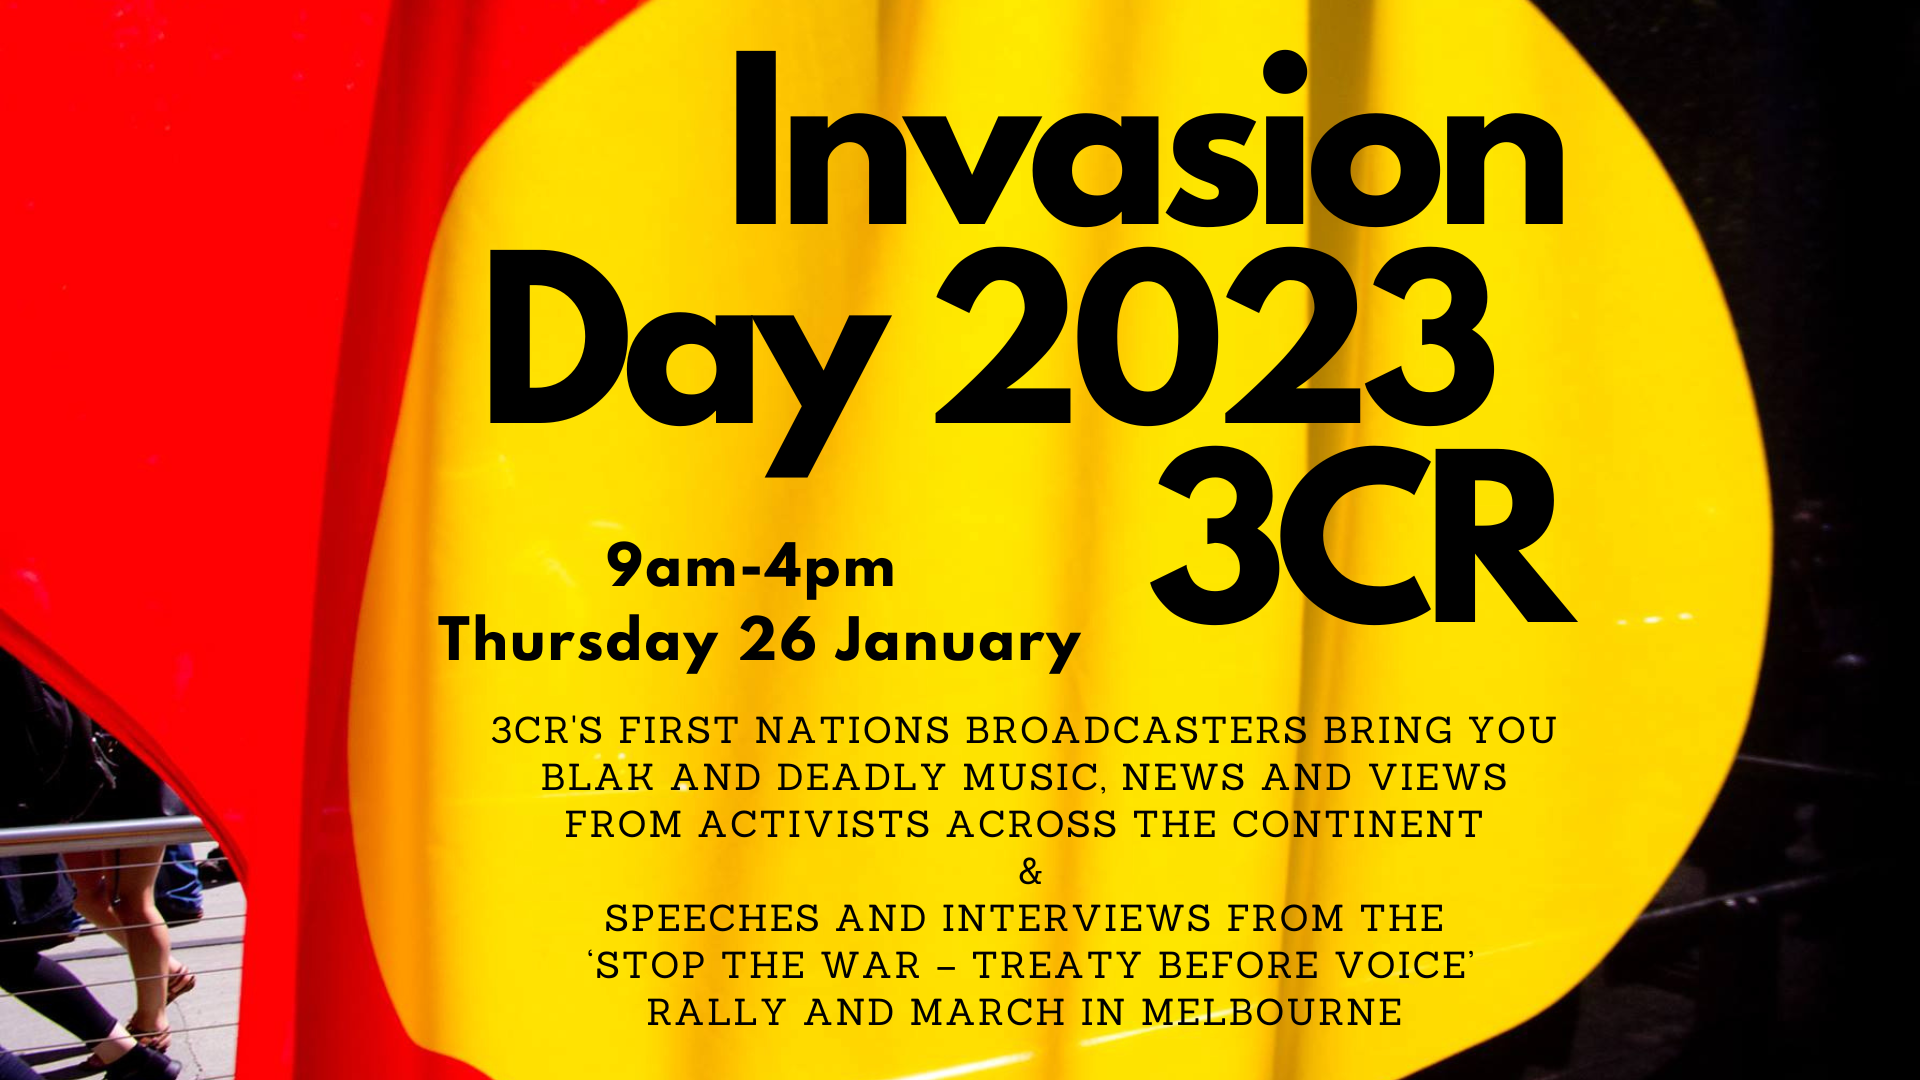 Invasion Day 2023 3CR broadcast